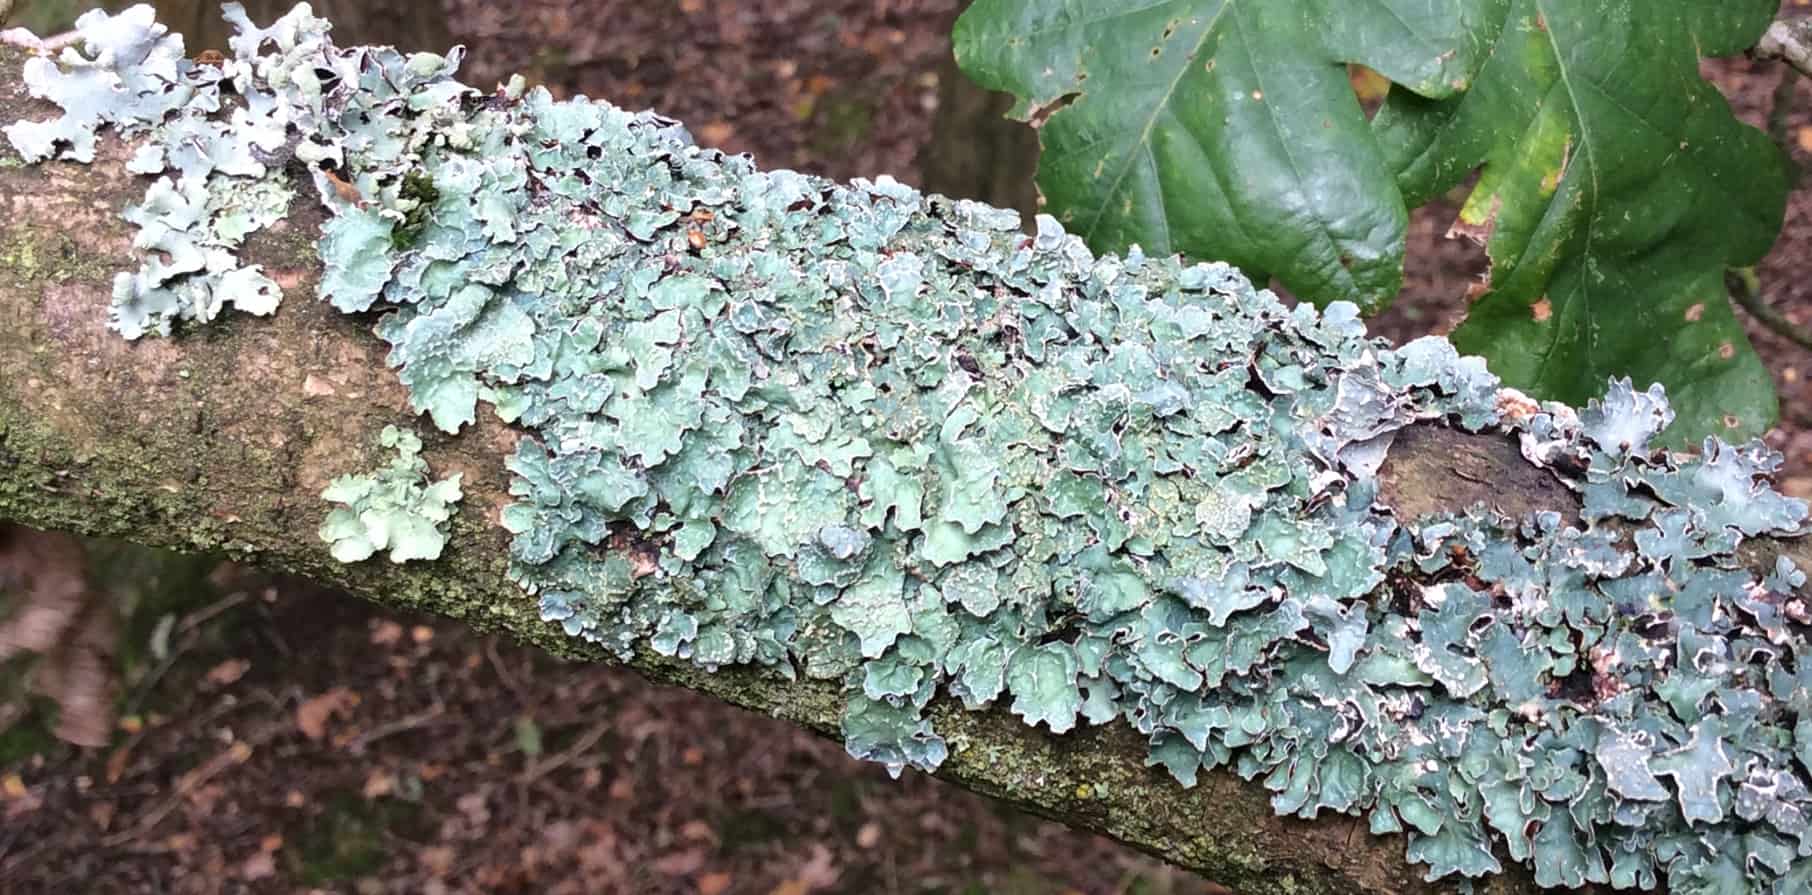 Green lichen on dead wood